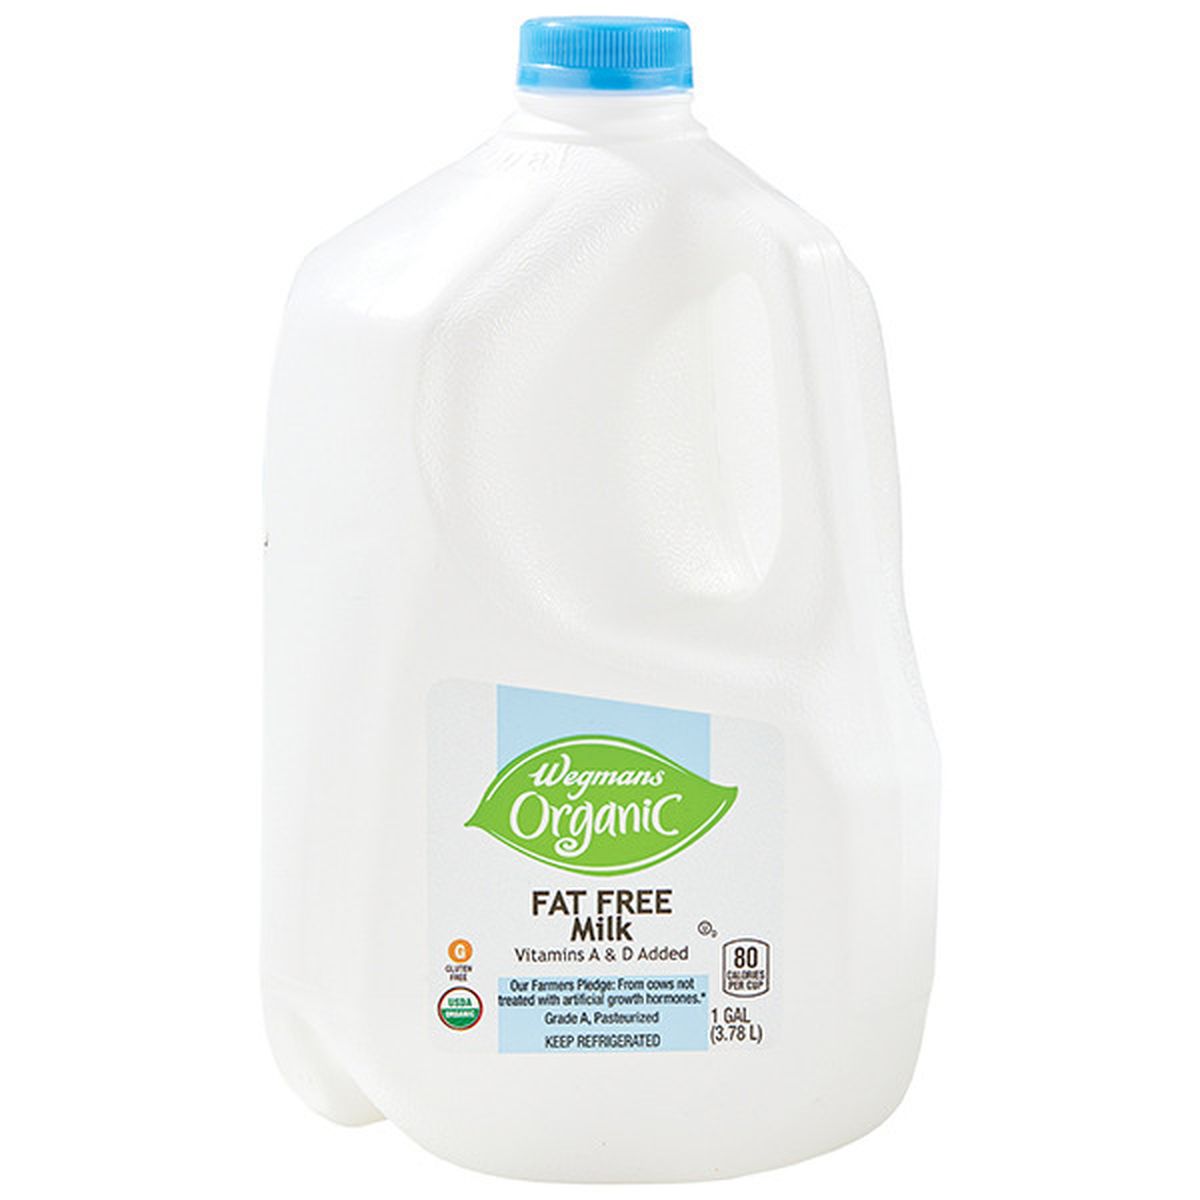 Calories in Wegmans Organic Fat Free Milk